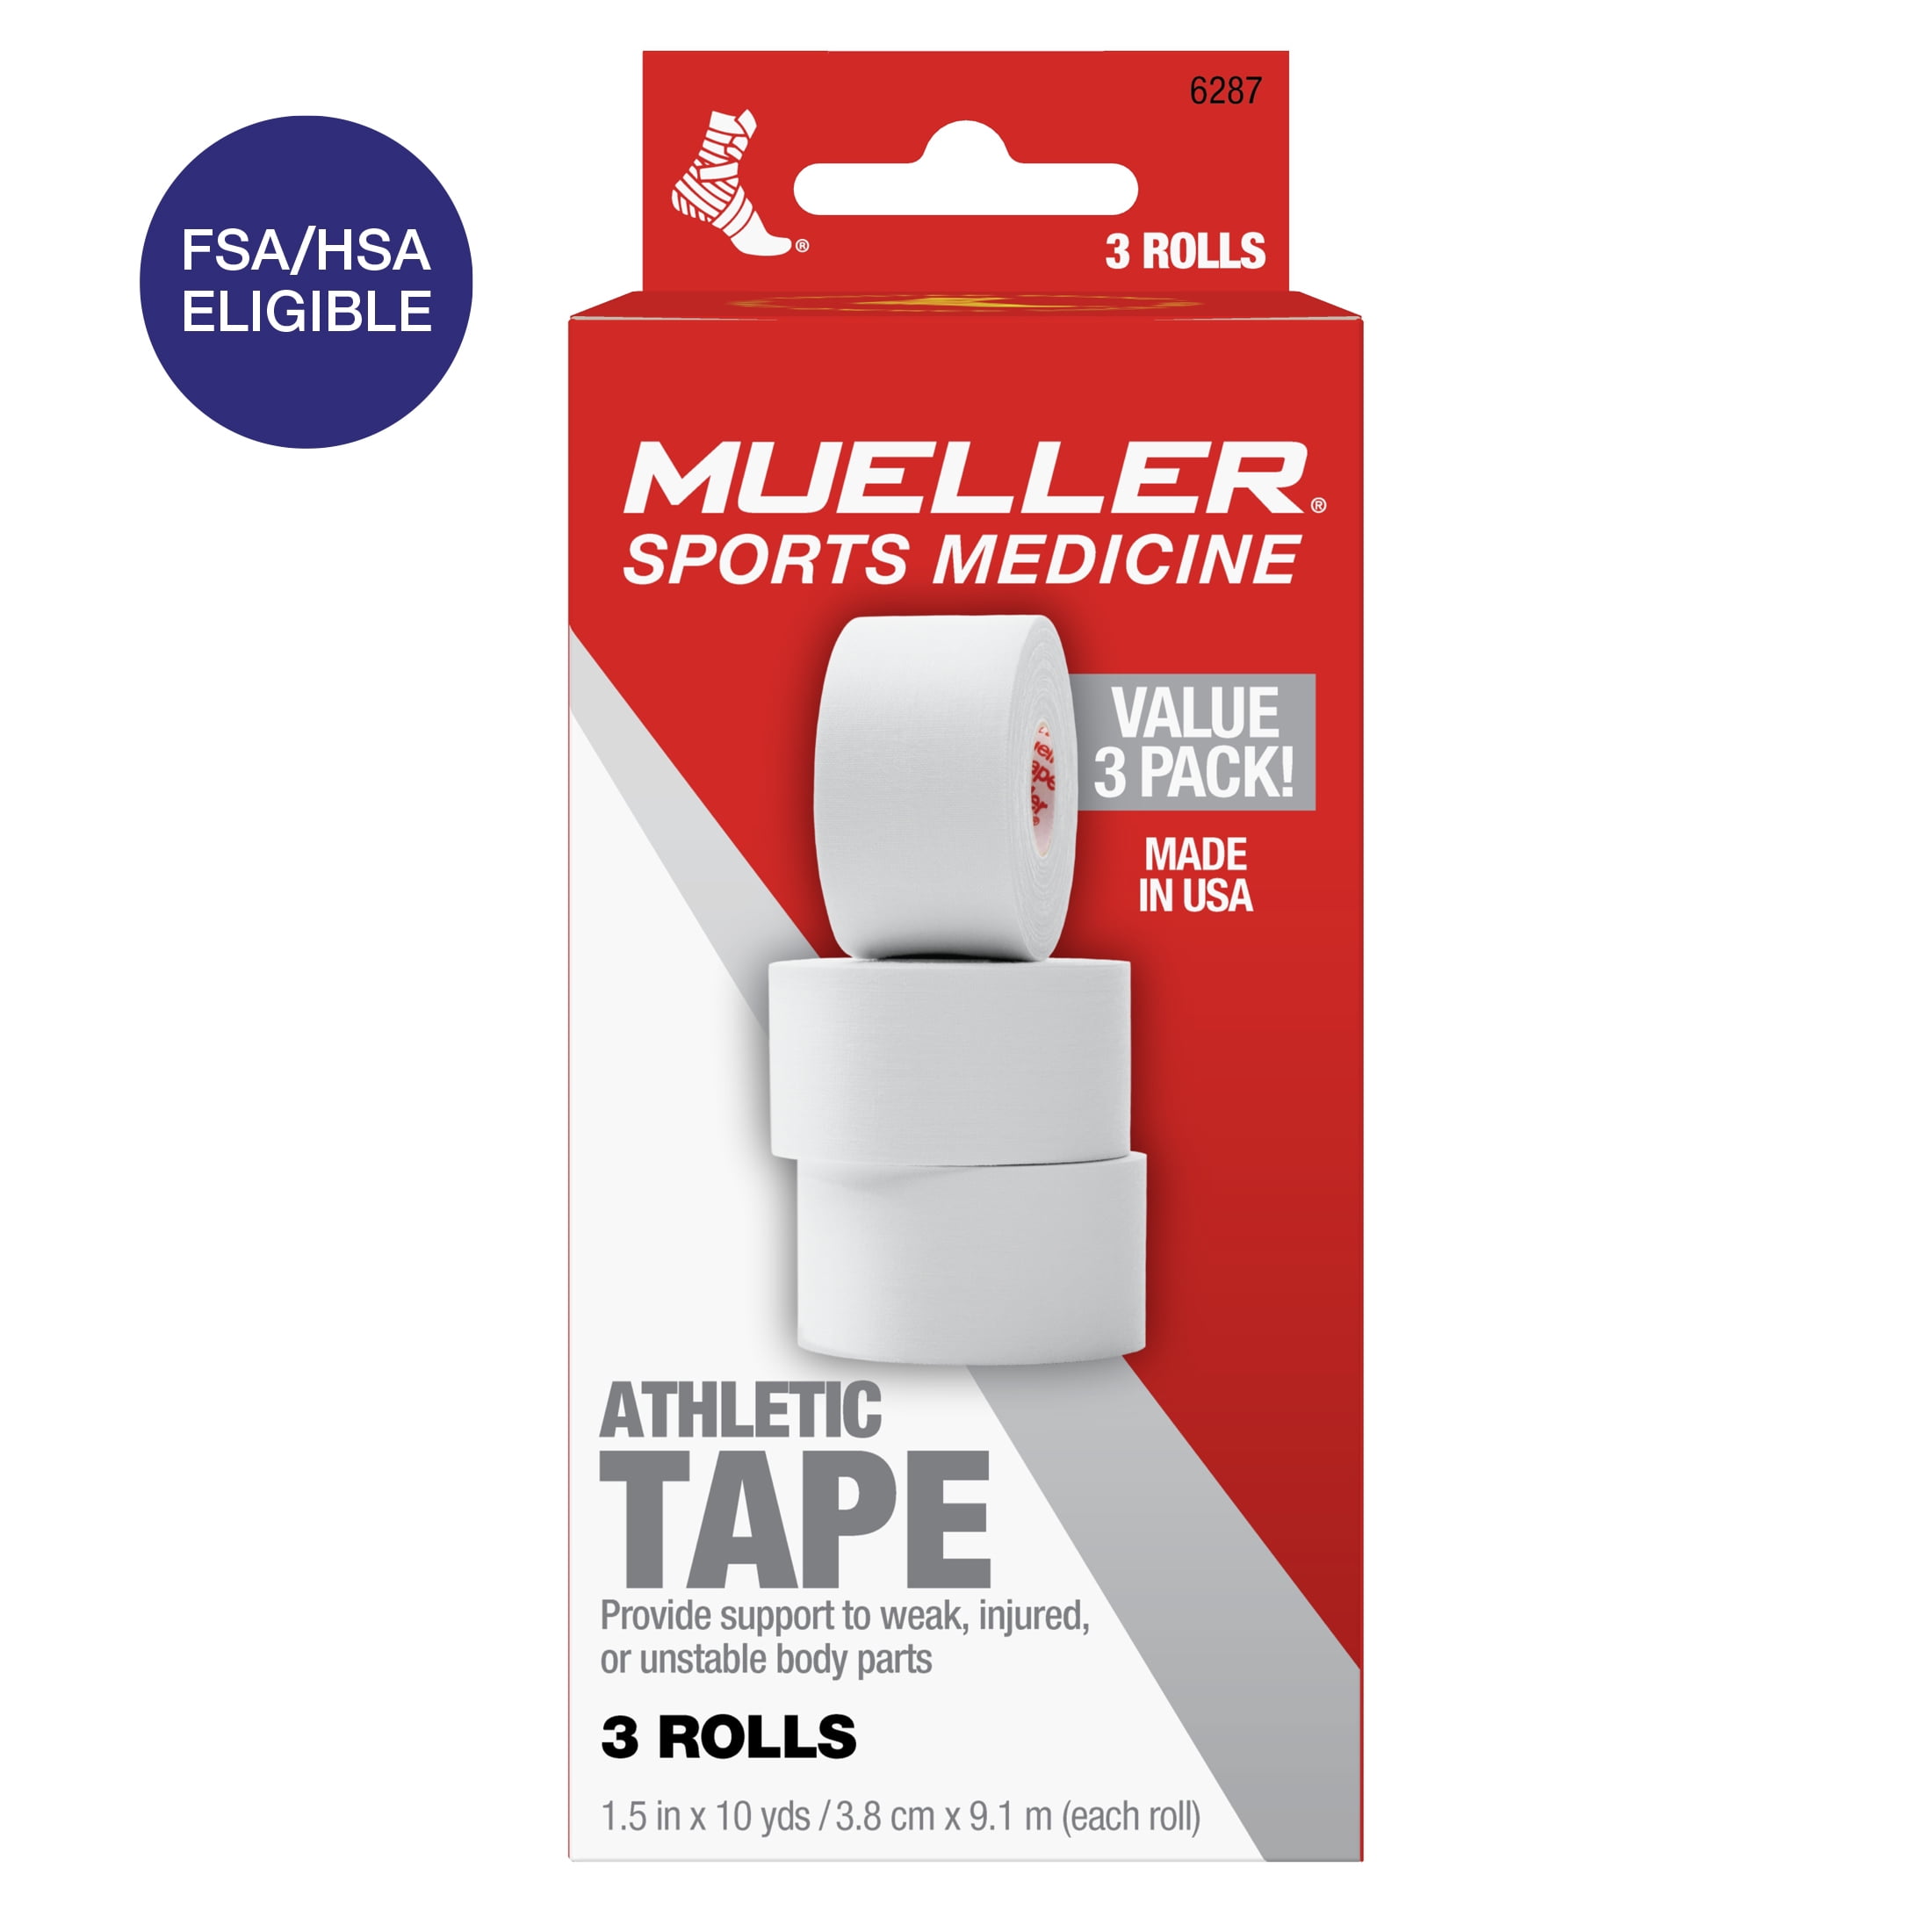 Mueller Sport Tape General Purpose Athletic Tape